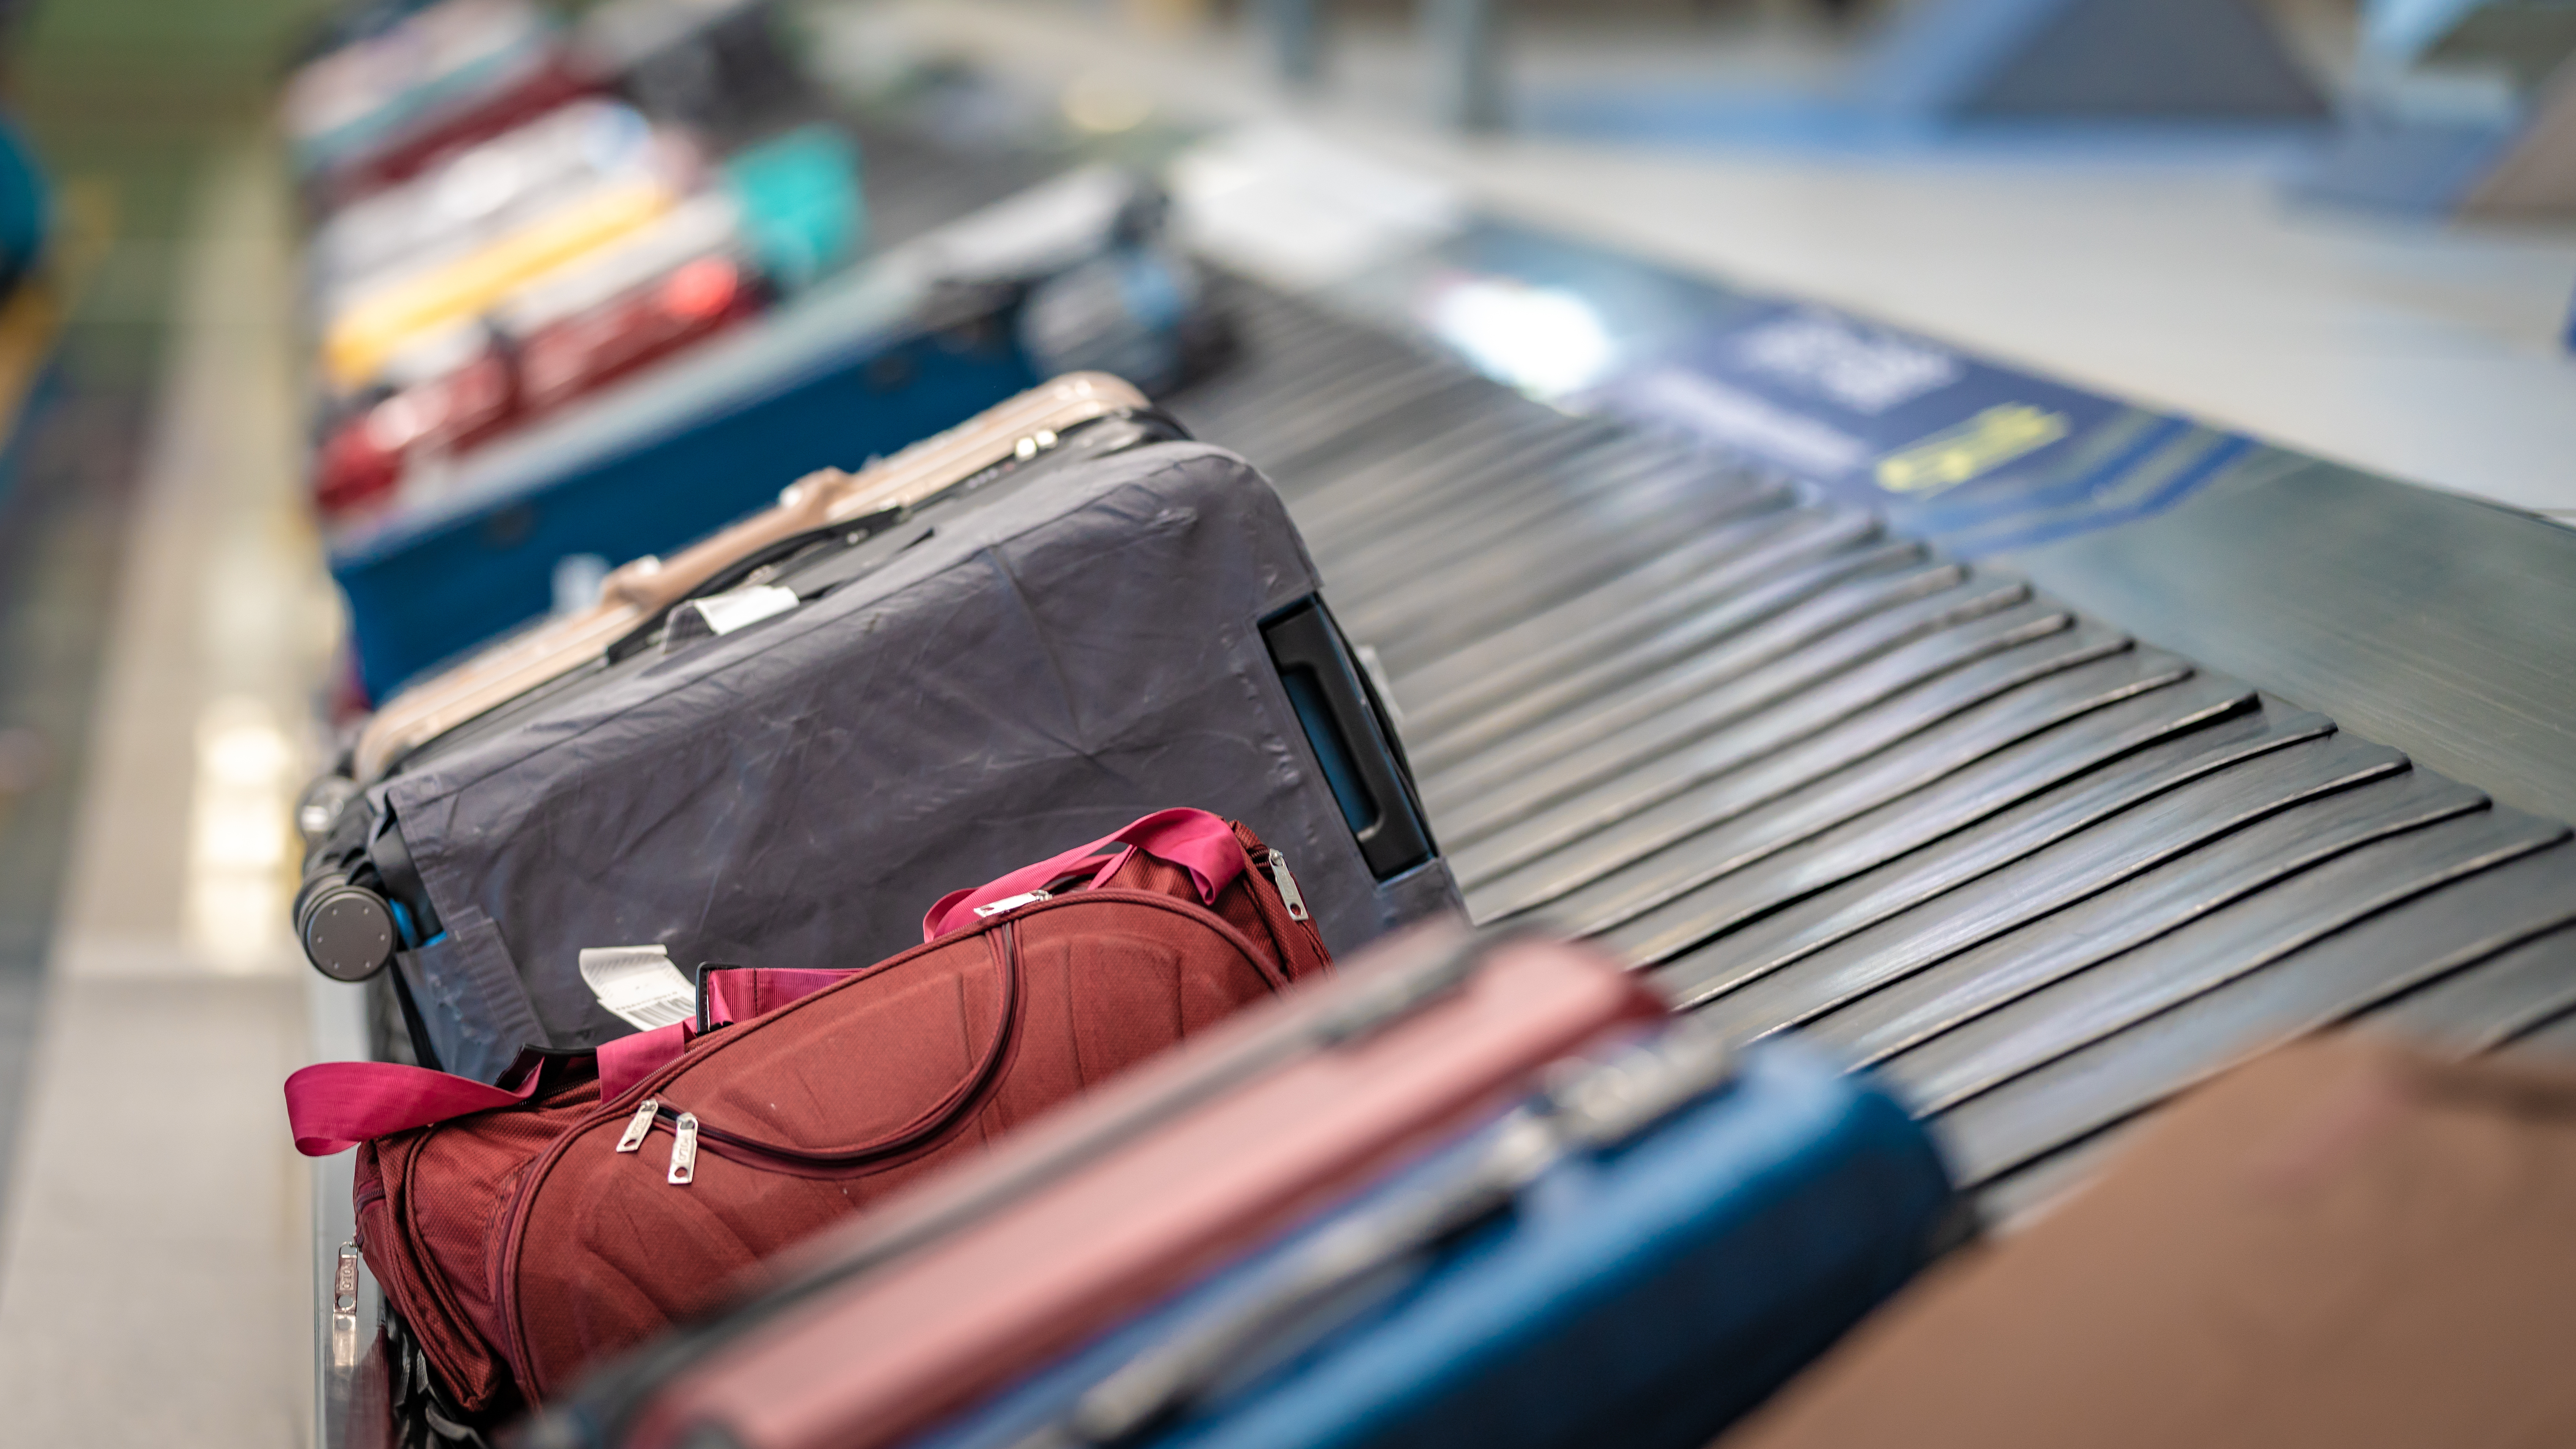 Baggage claim conveyor belt